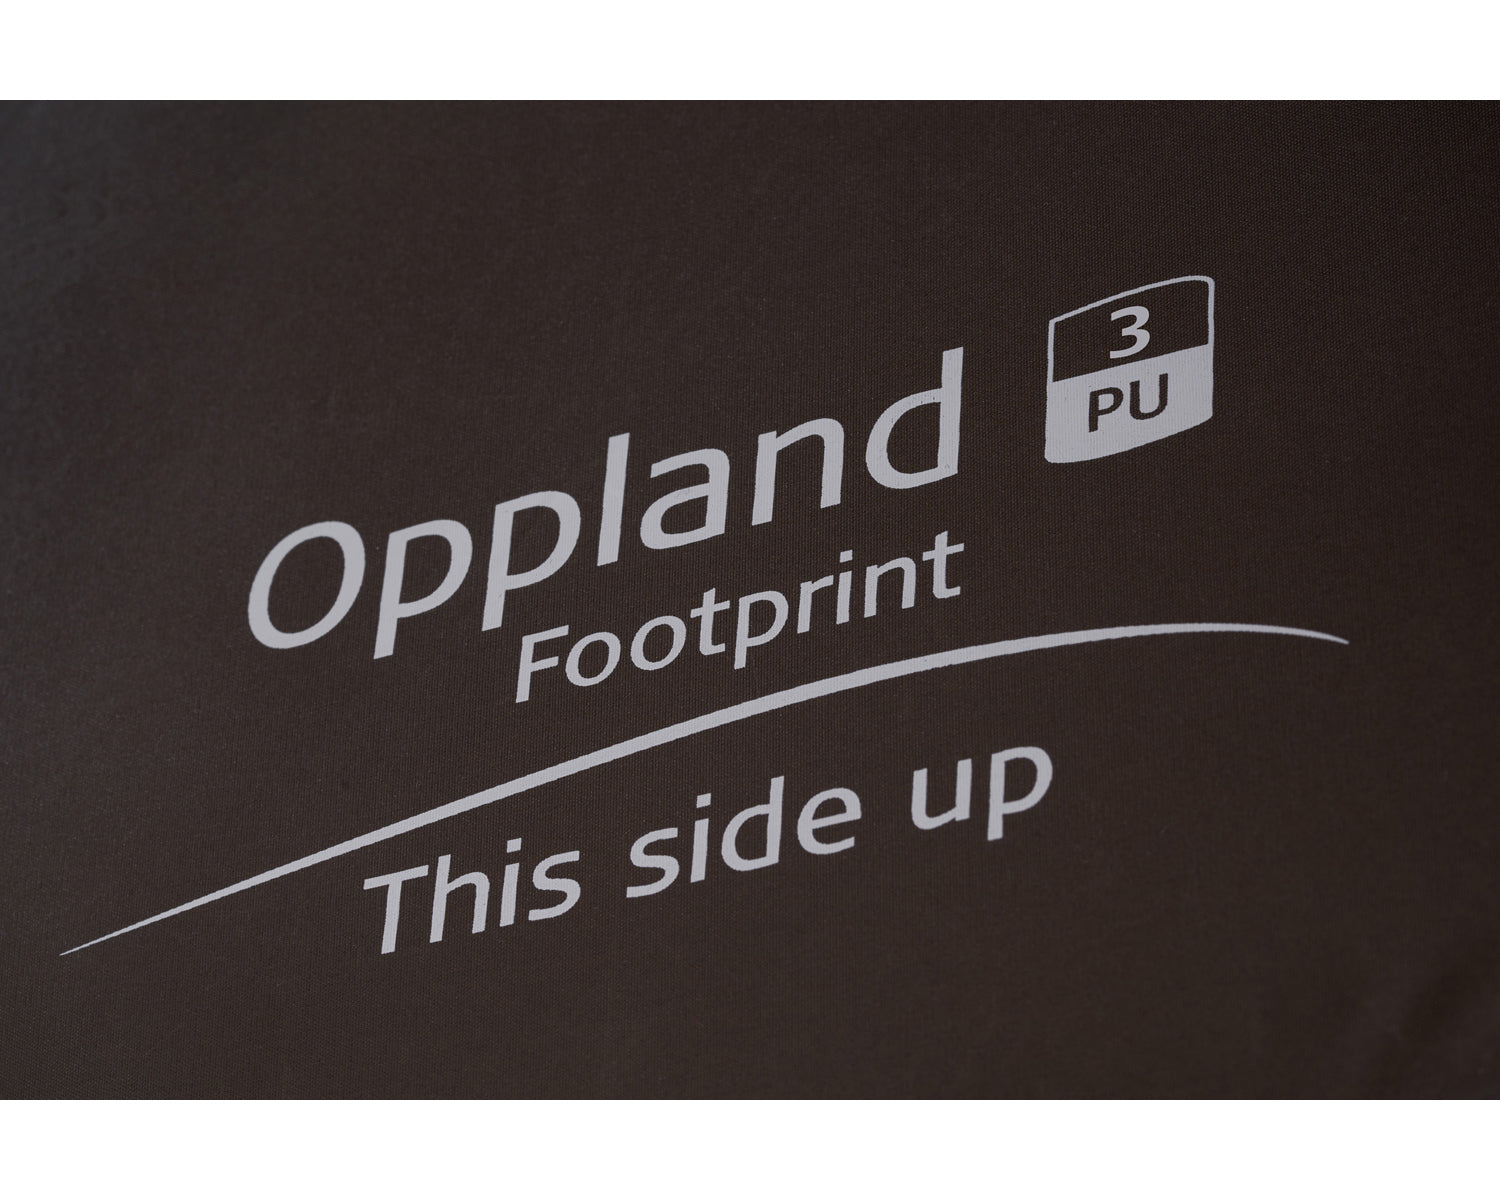 Oppland 3 (2.0) footprint - ONESIZE - Demitasse